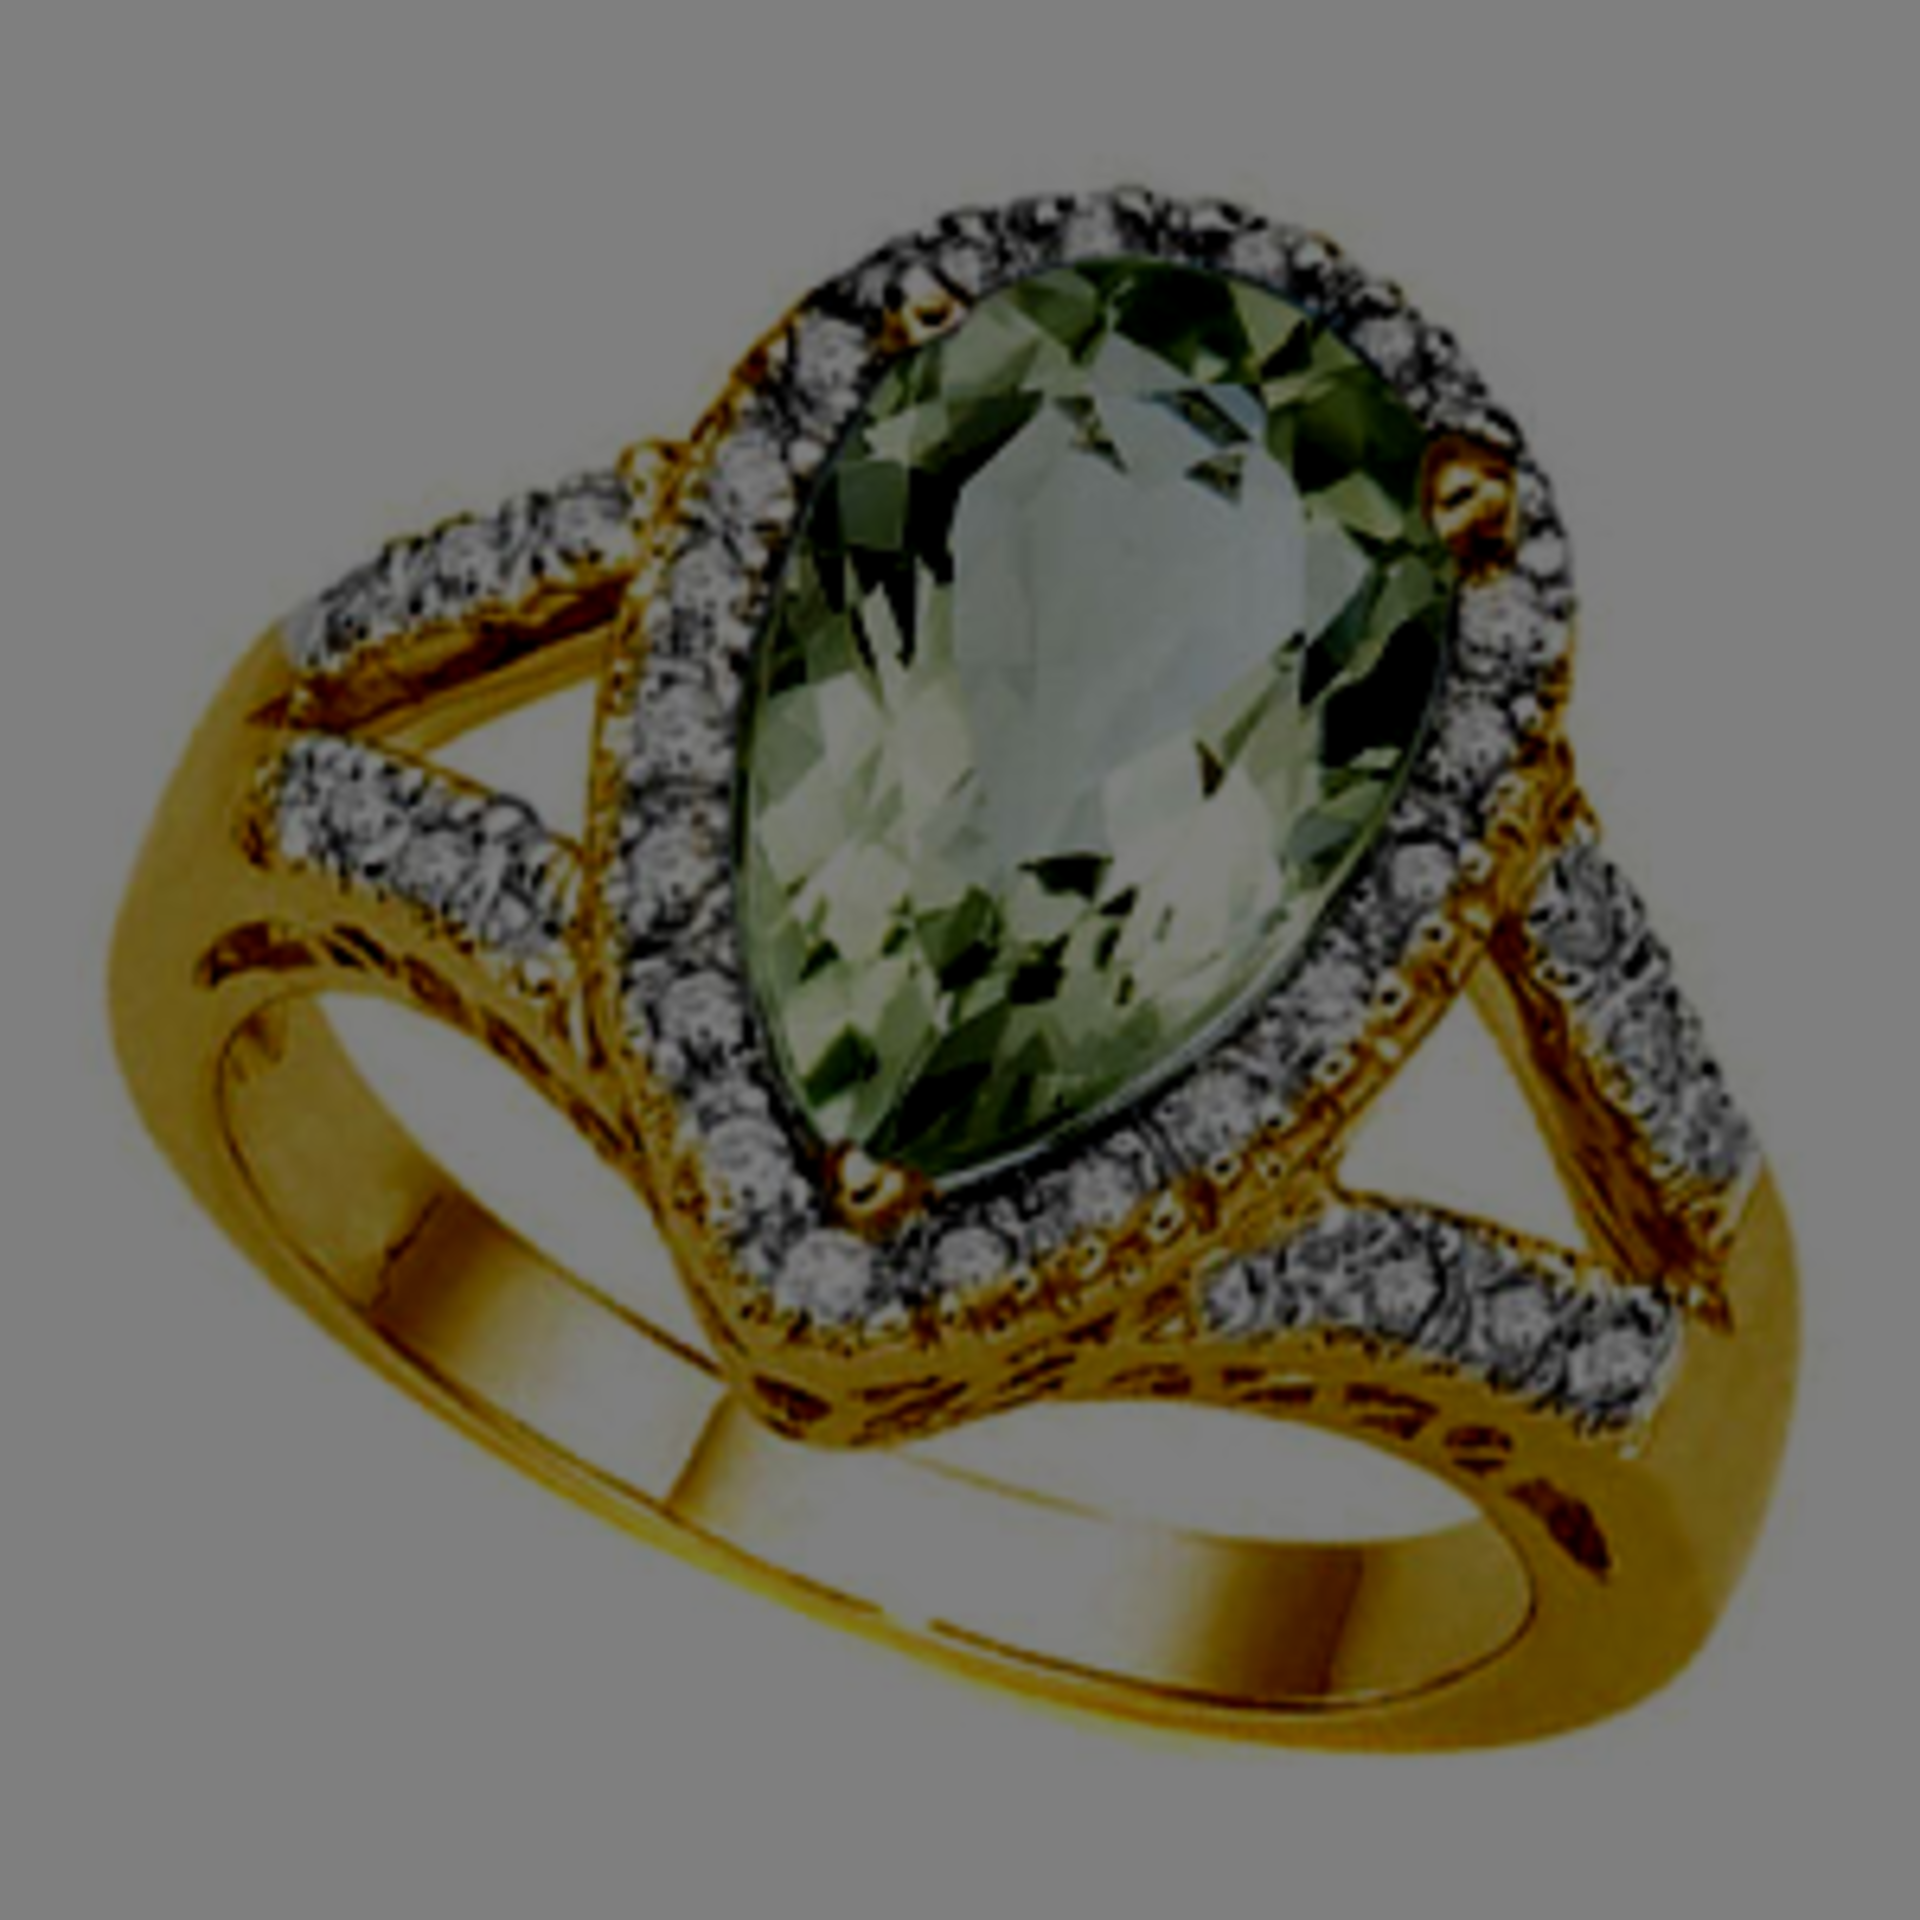 PRETTY 1.80 CT GREEN AMETHYST & 32PCS GENUINE DIAMOND 925 STERLING SILVER RING - Image 2 of 2